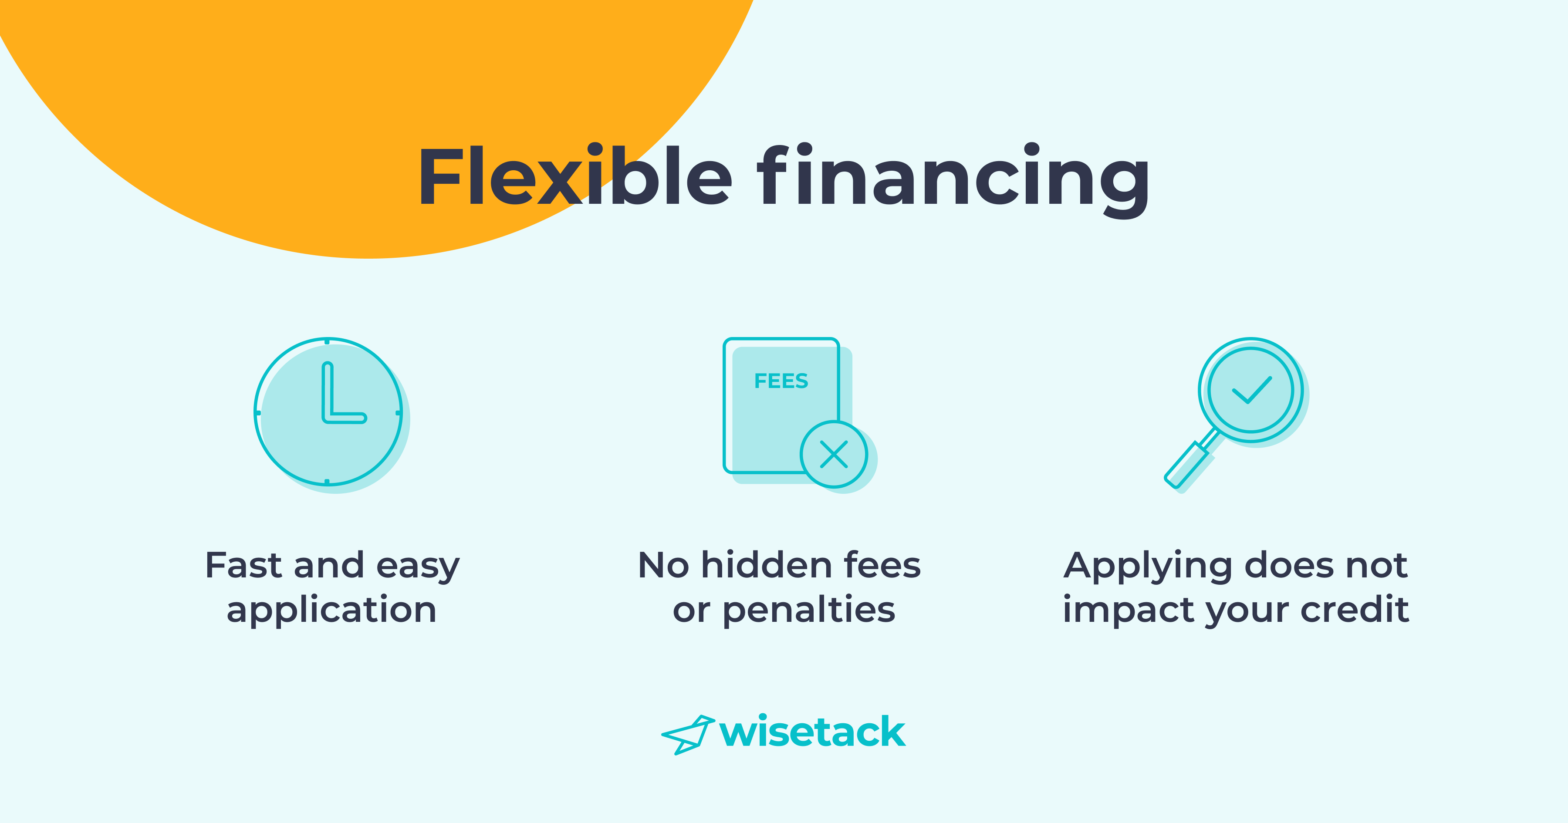 Flexible financing options